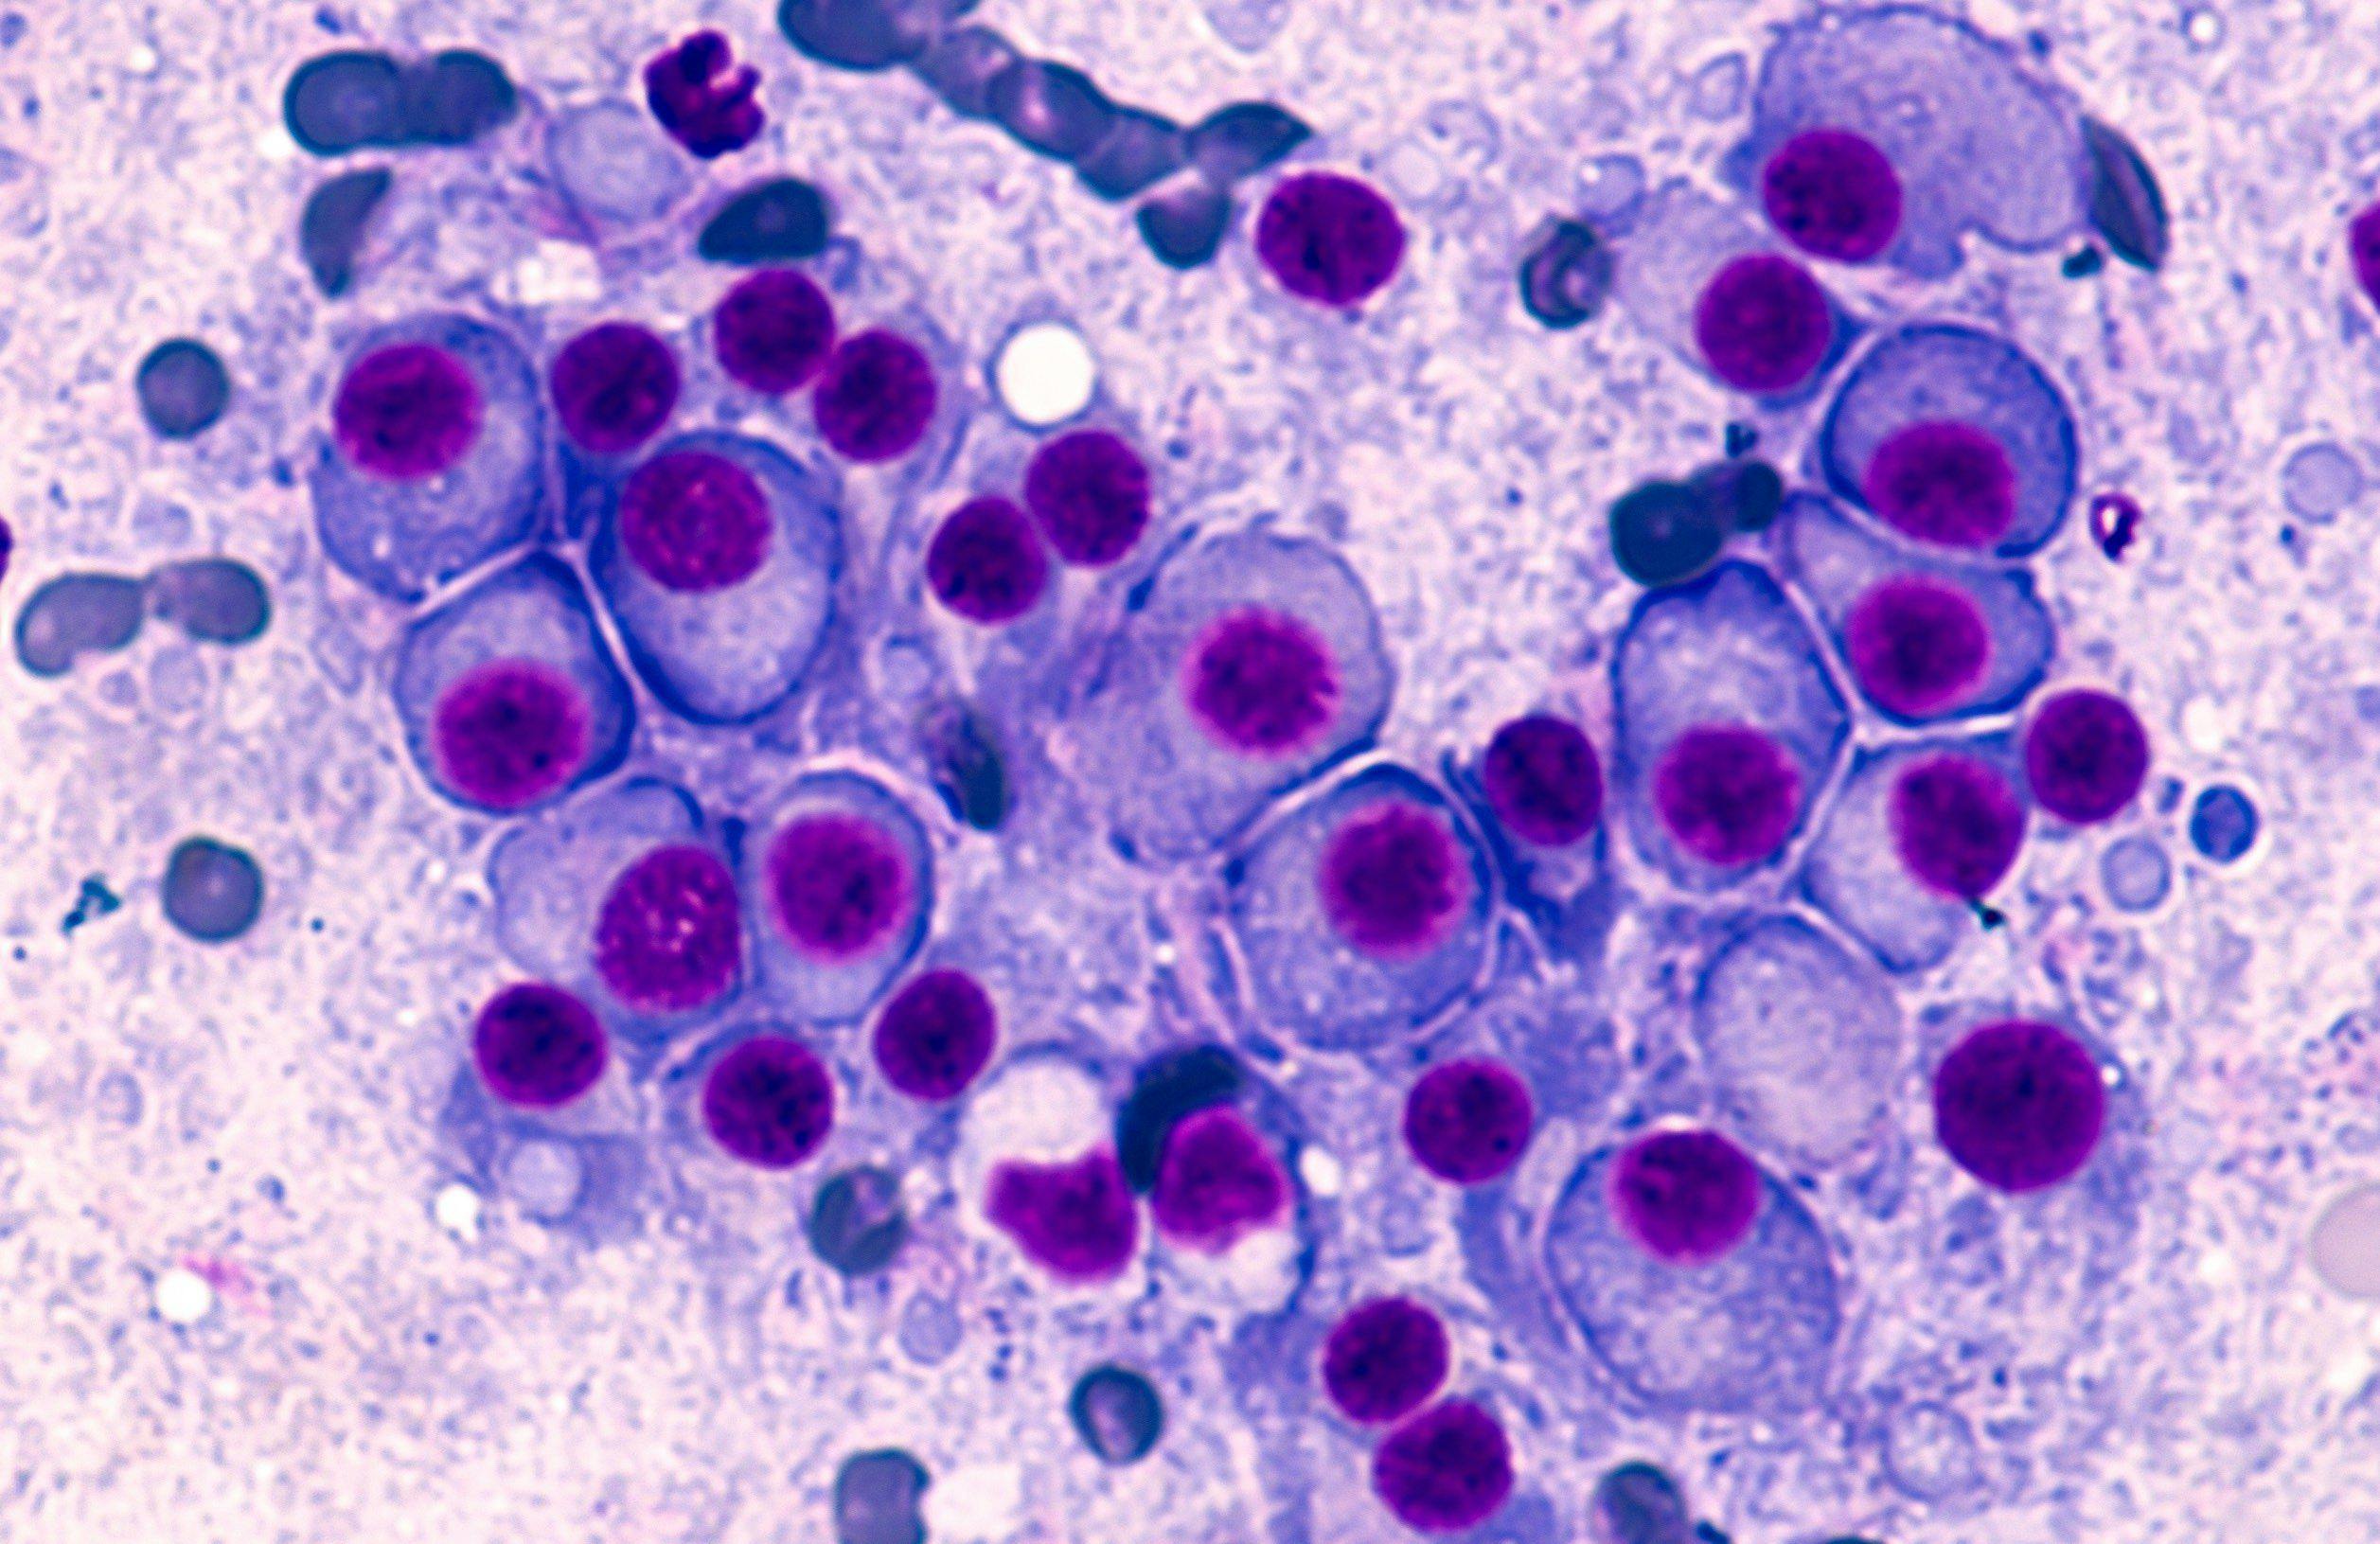 Multiple myeloma cells | Image credit: David A Litman - stock.adobe.com